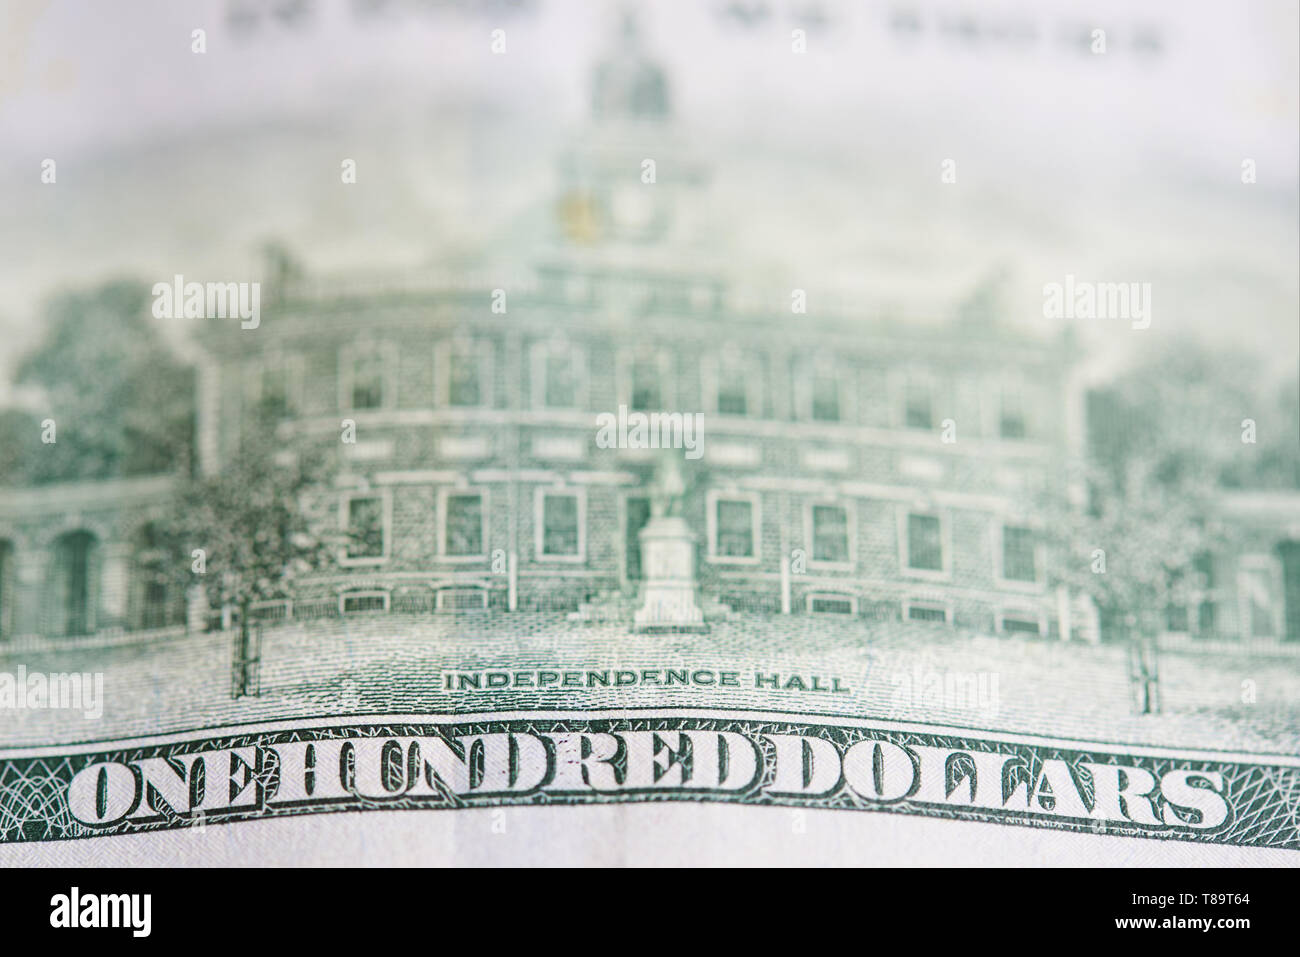 Independence hall photo on hundred dollar bill back Stock Photo